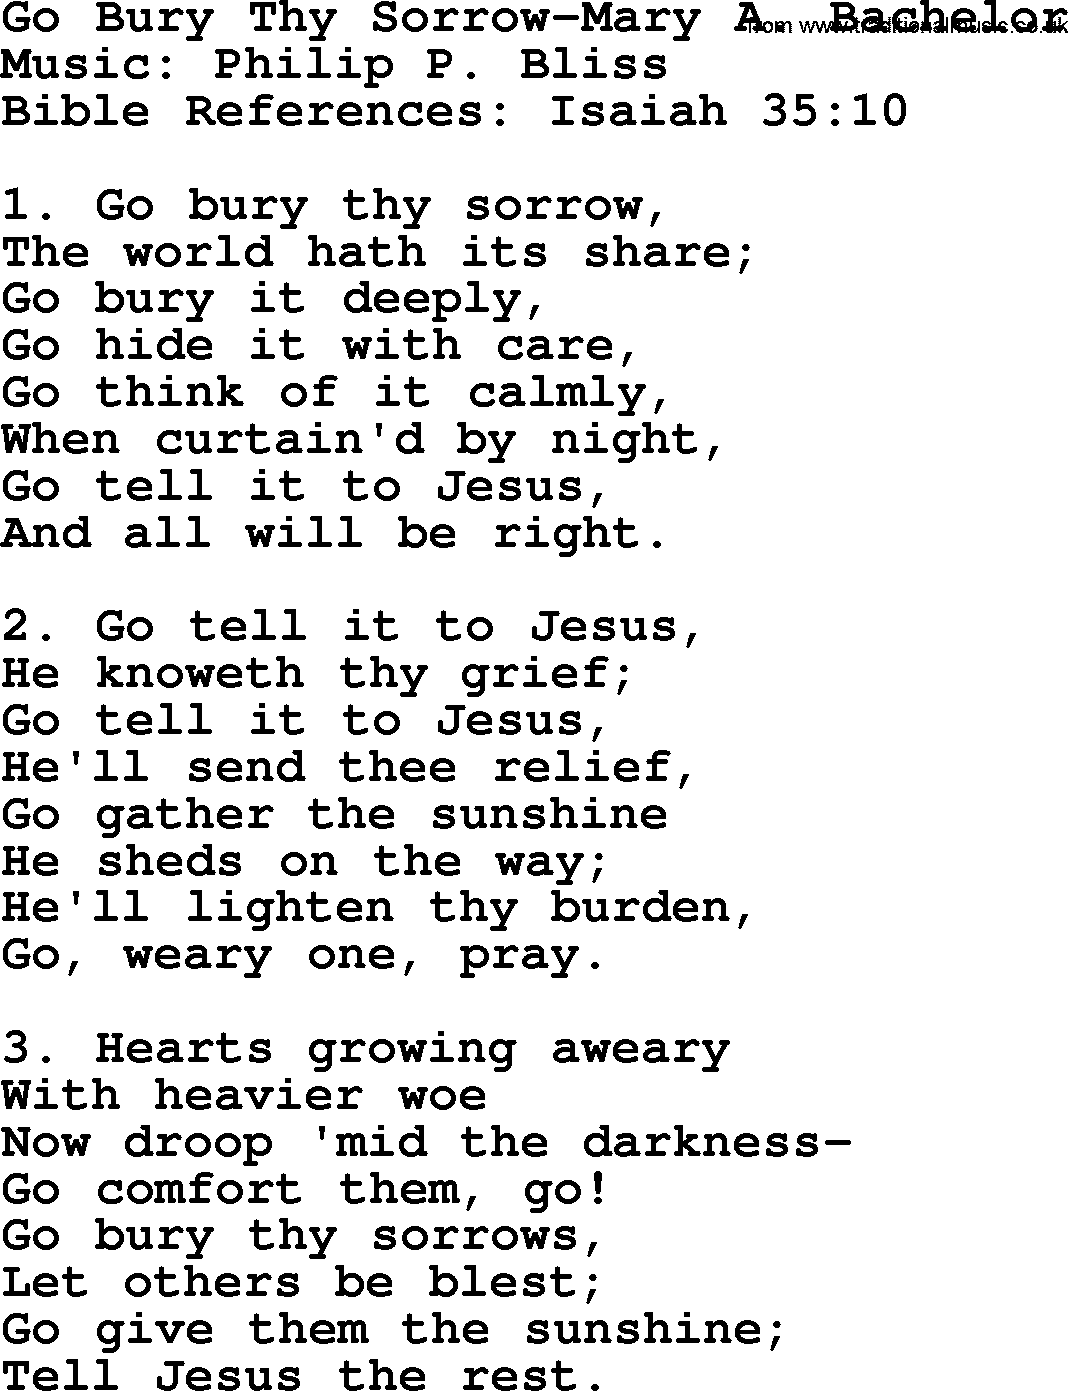 Philip Bliss Song: Go Bury Thy Sorrow, lyrics